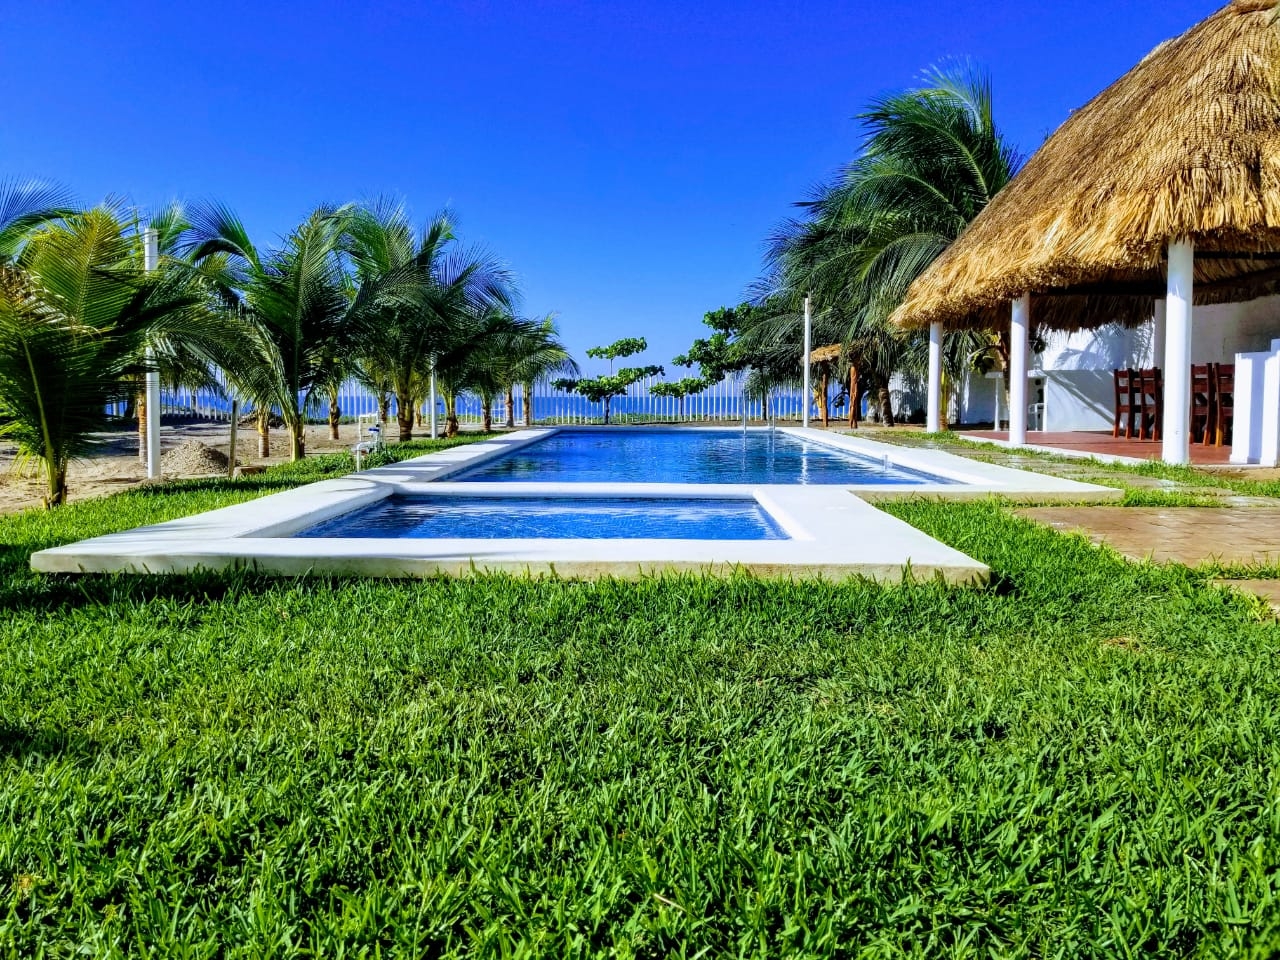 Casa Sunset en Playa del Sol - Houses for Rent in Puerto Arista, Chiapas,  Mexico - Airbnb